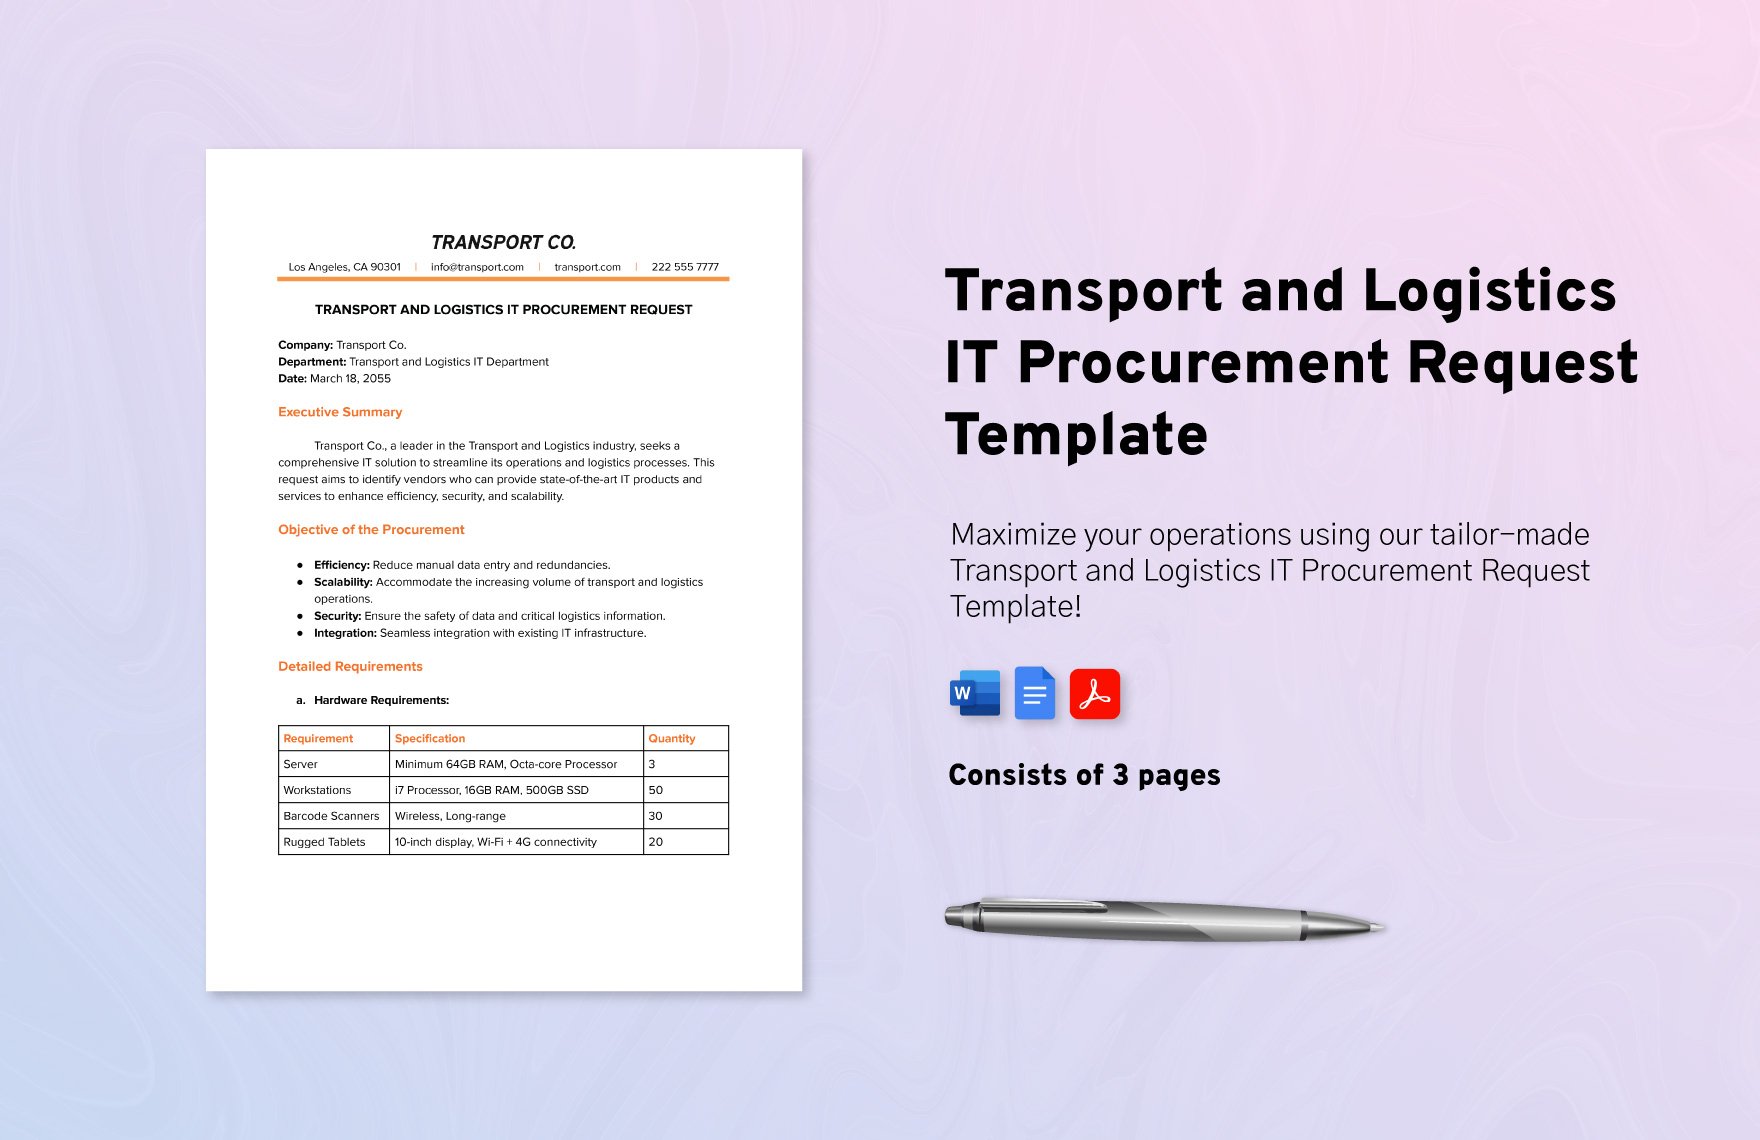 Transport and Logistics IT Procurement Request Template